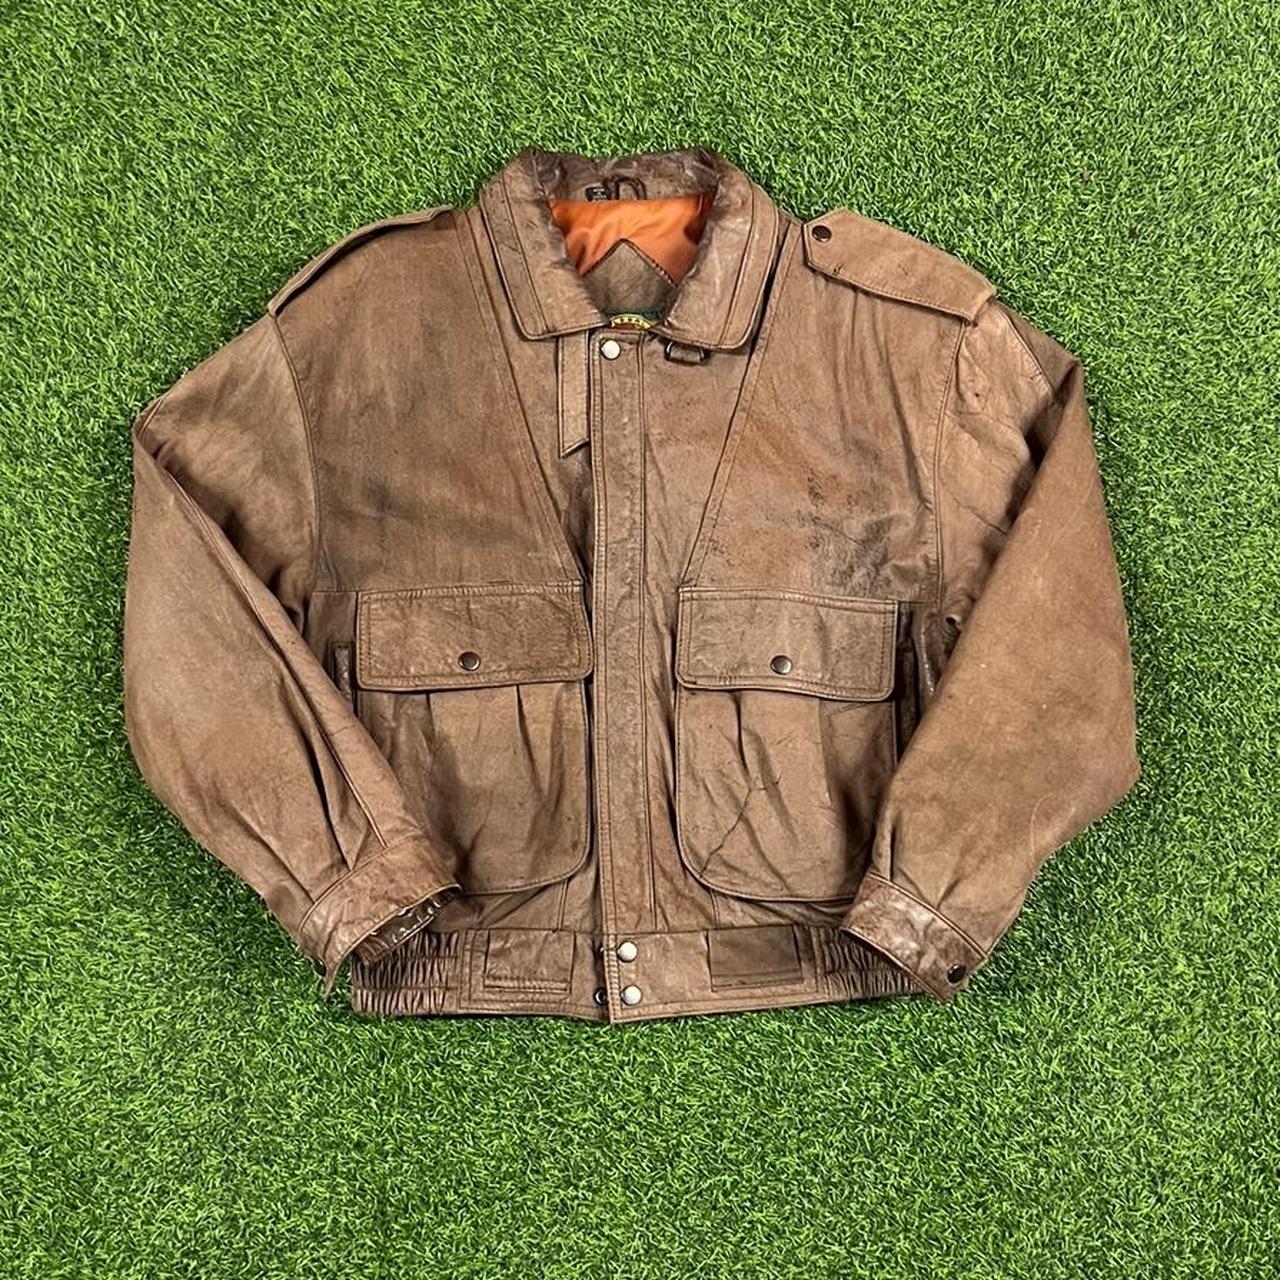 Product Image 1 - Vintage brown leather bomber jacket
G3